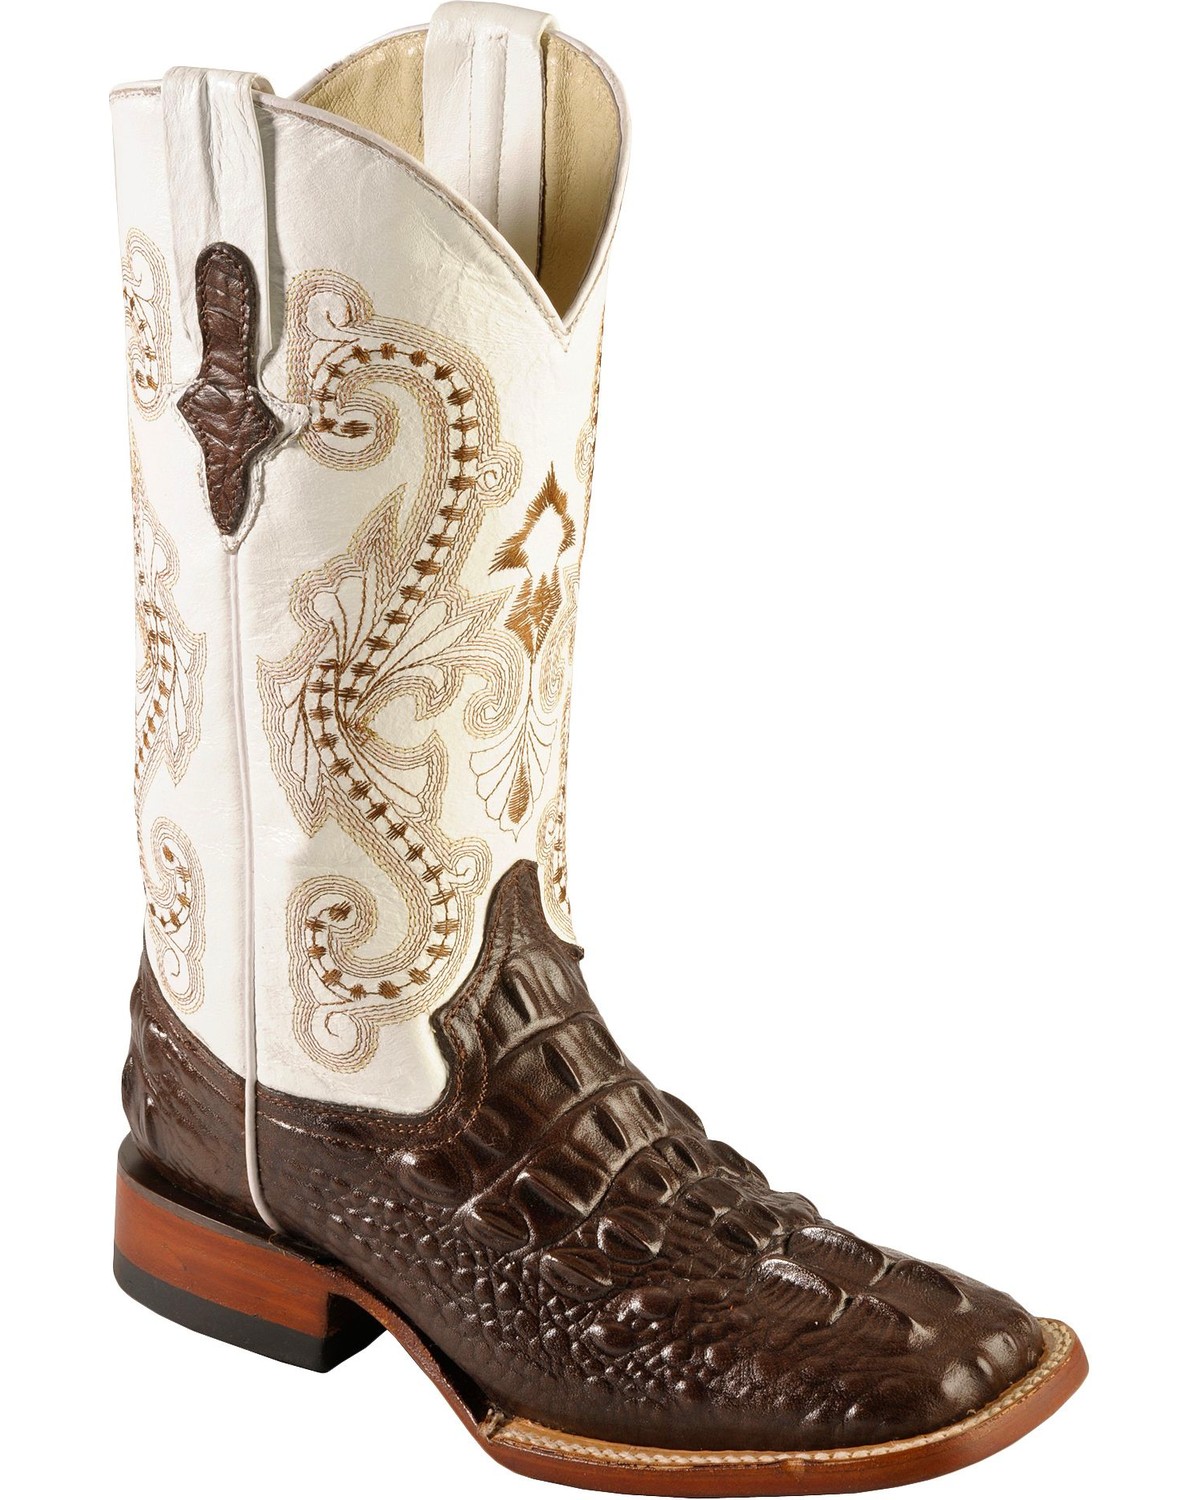 Ferrini Women's Hornback Caiman Print Western Boots - Broad Square Toe